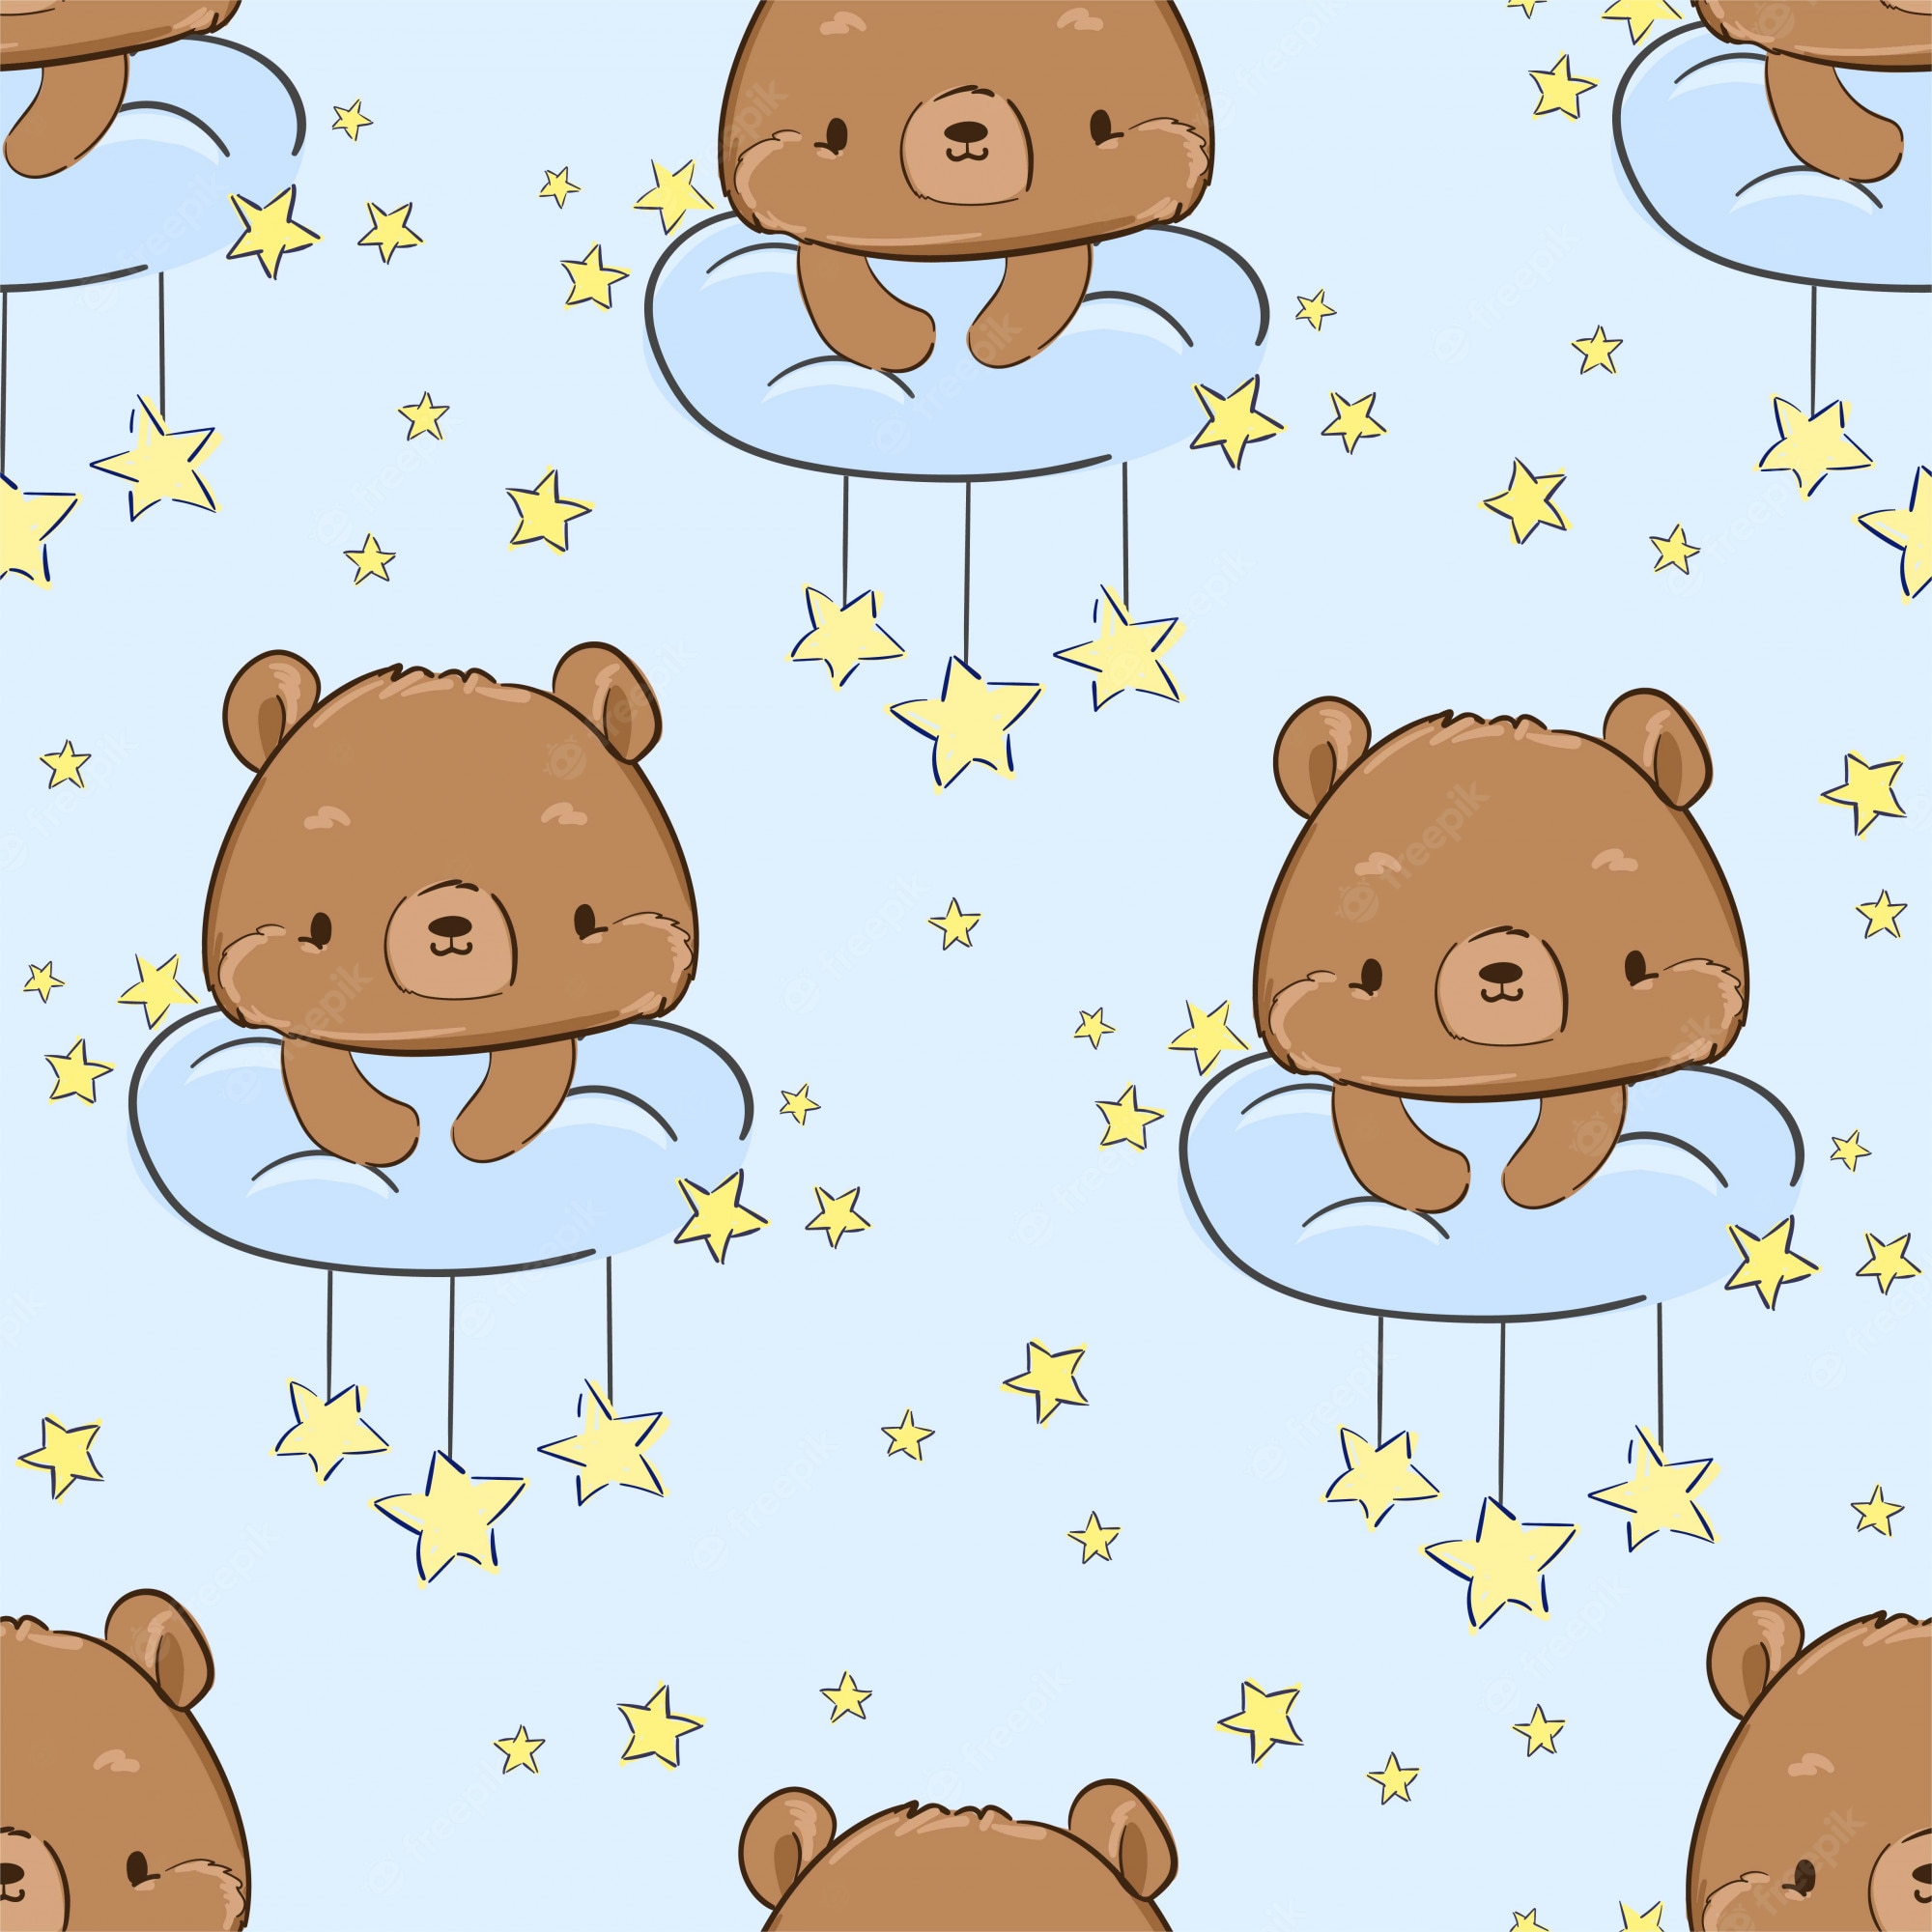 Cute Teddy Bear Aesthetic Wallpapers